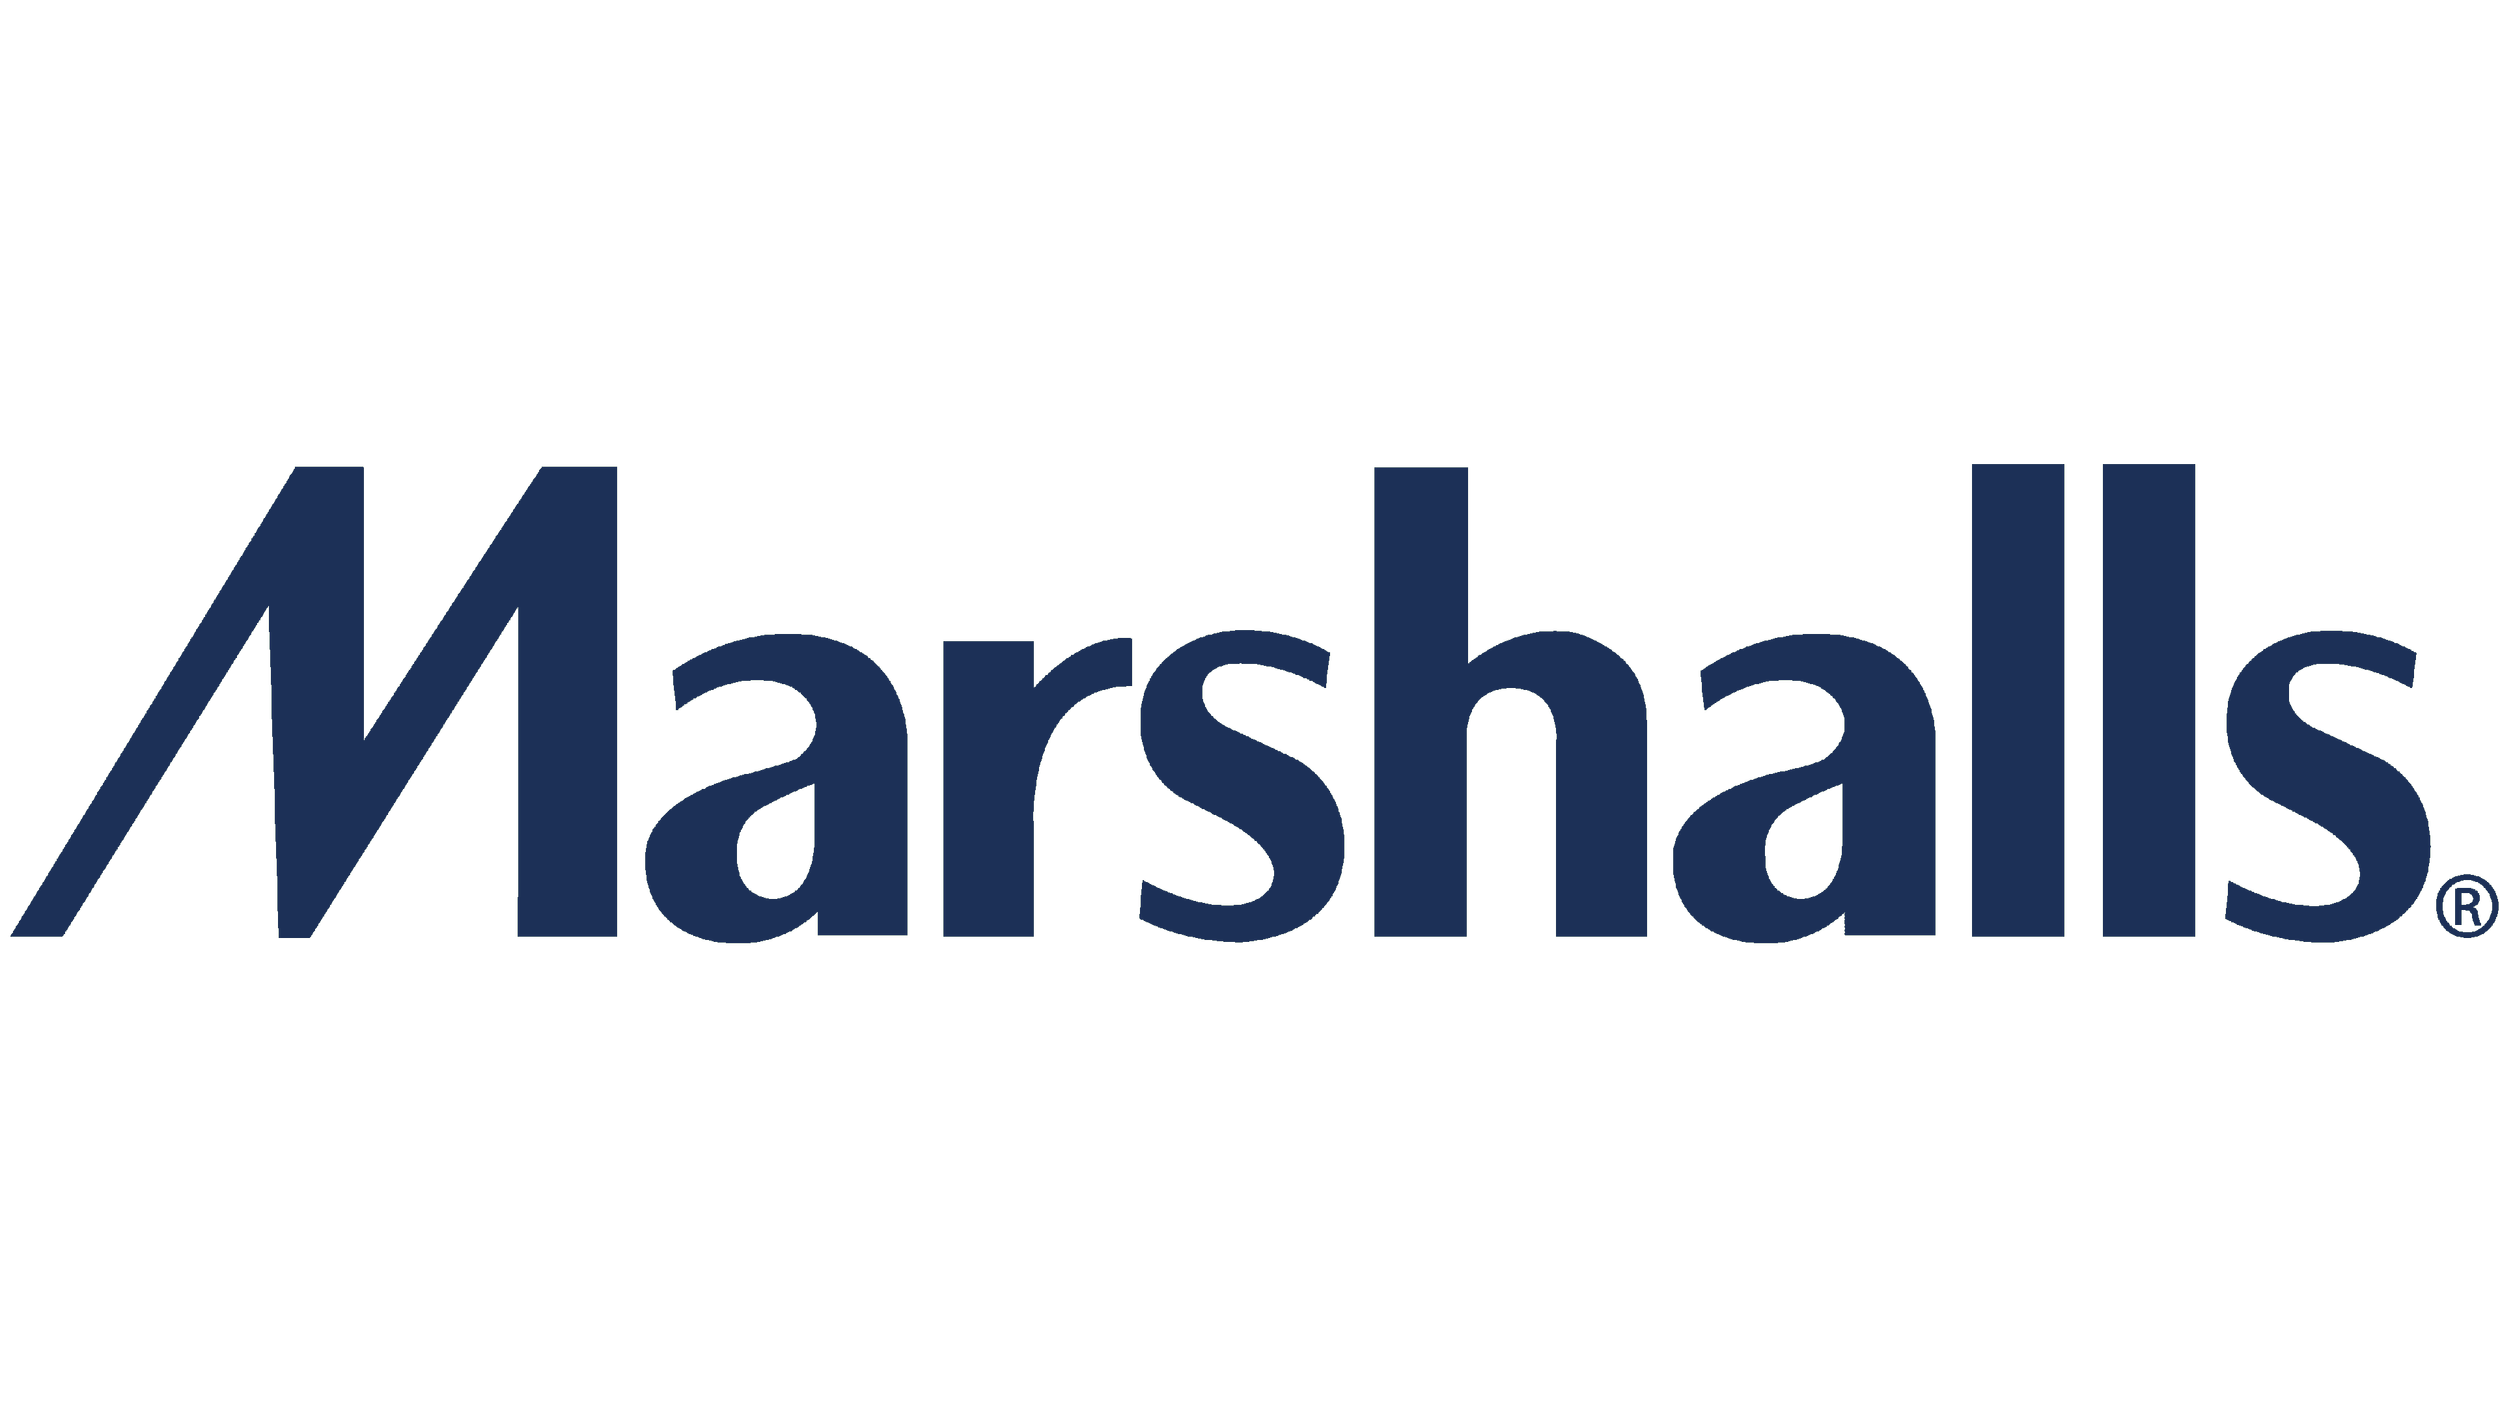 Marshalls-logo.png